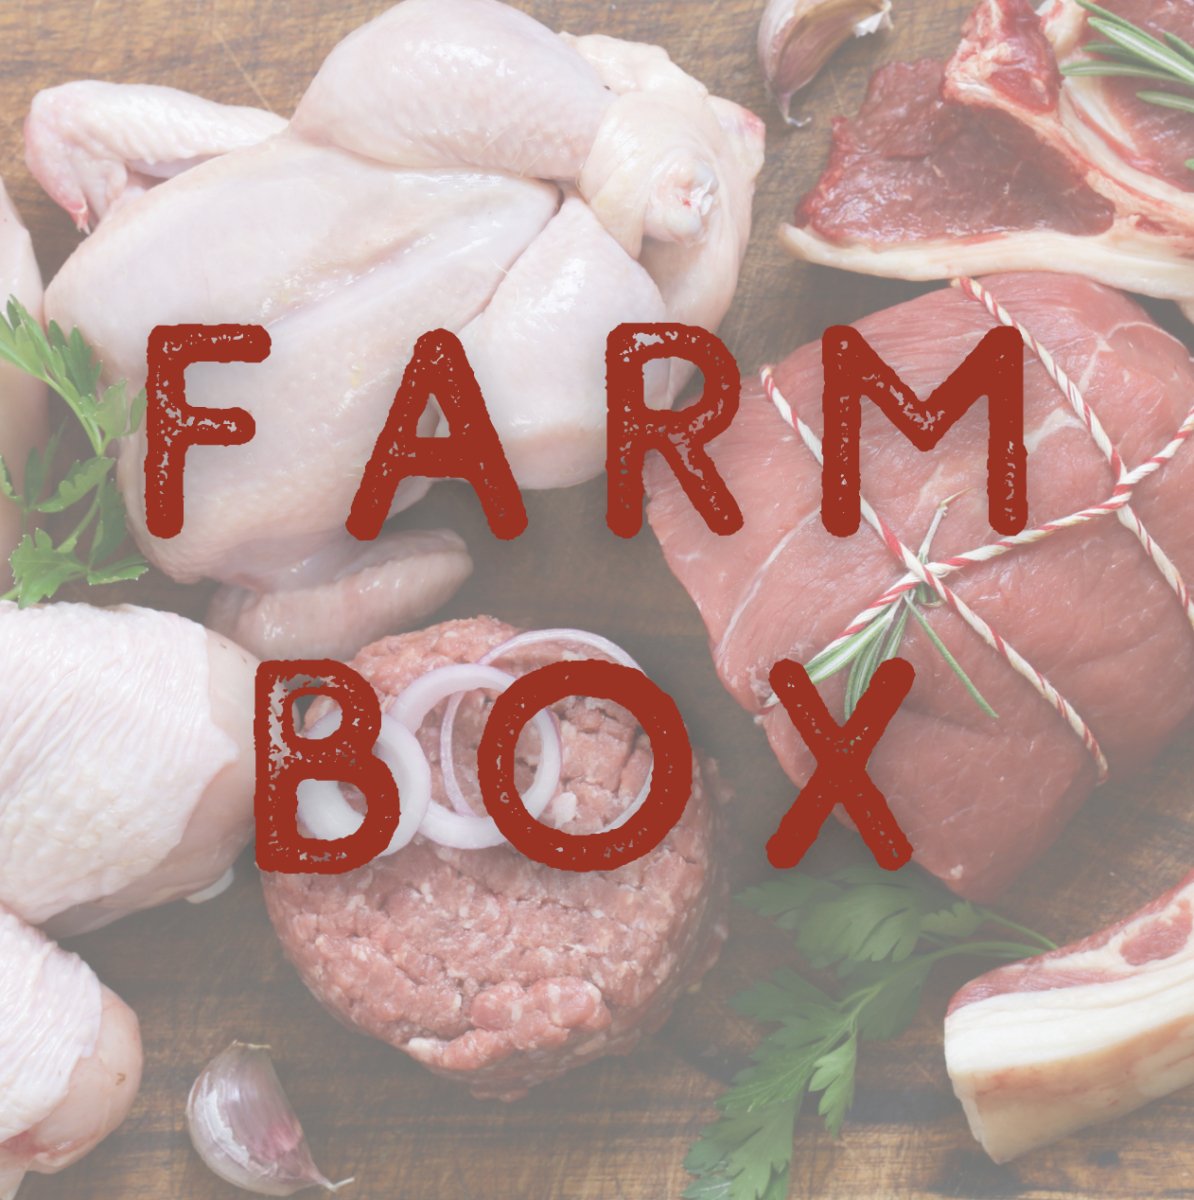 Farm Box - Monthly Goodness! - Heartstone Farm